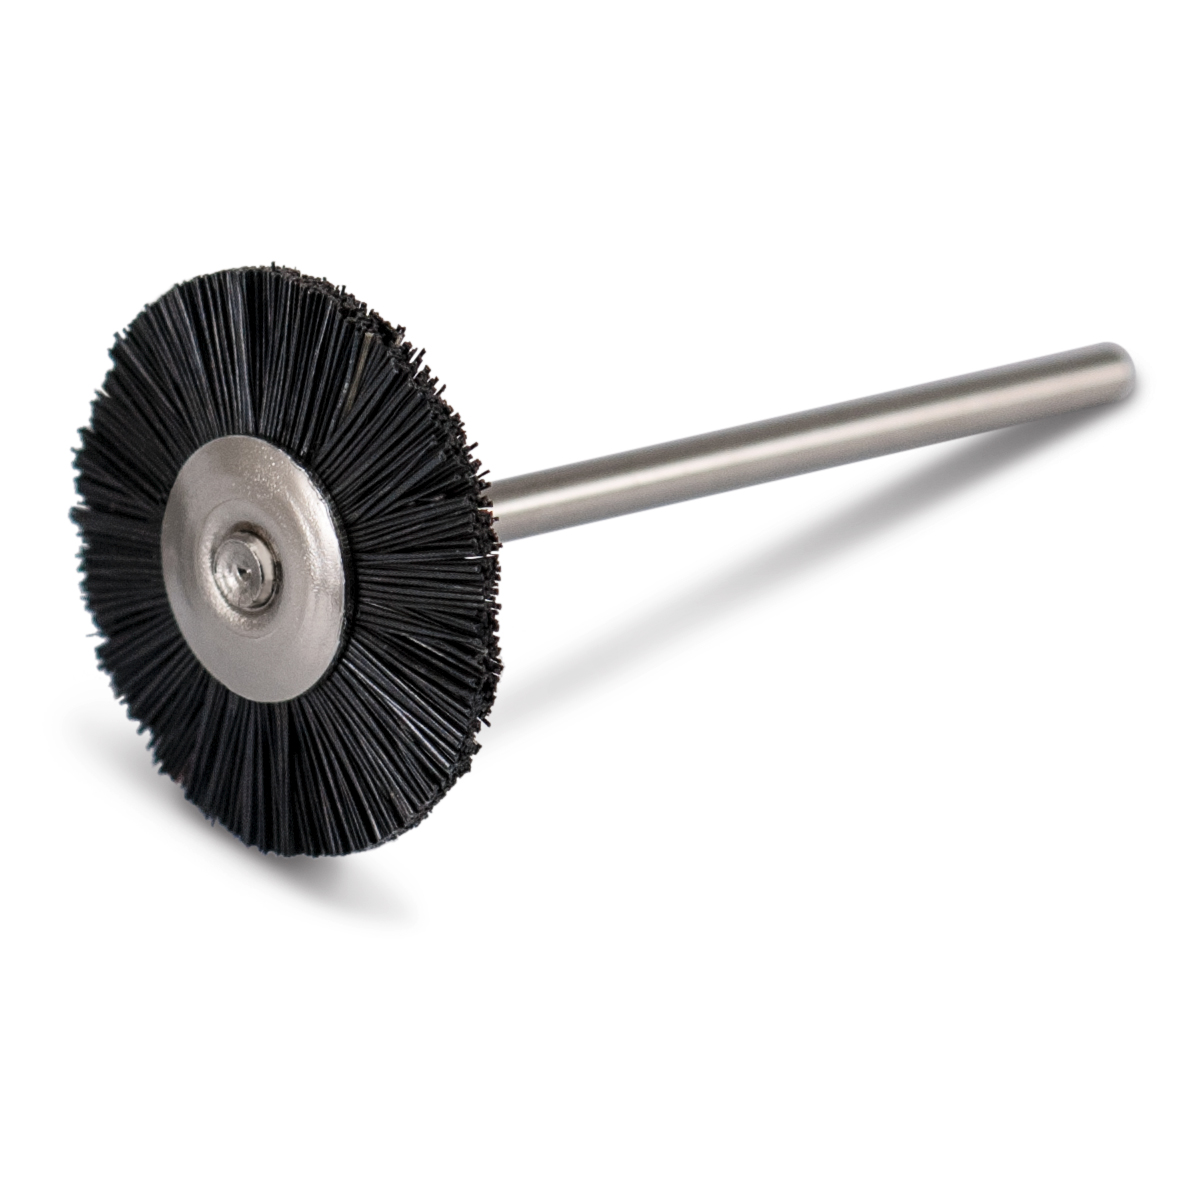 Circular brush, Chungking bristles, black, Ø 21 mm, hard, HP-shank